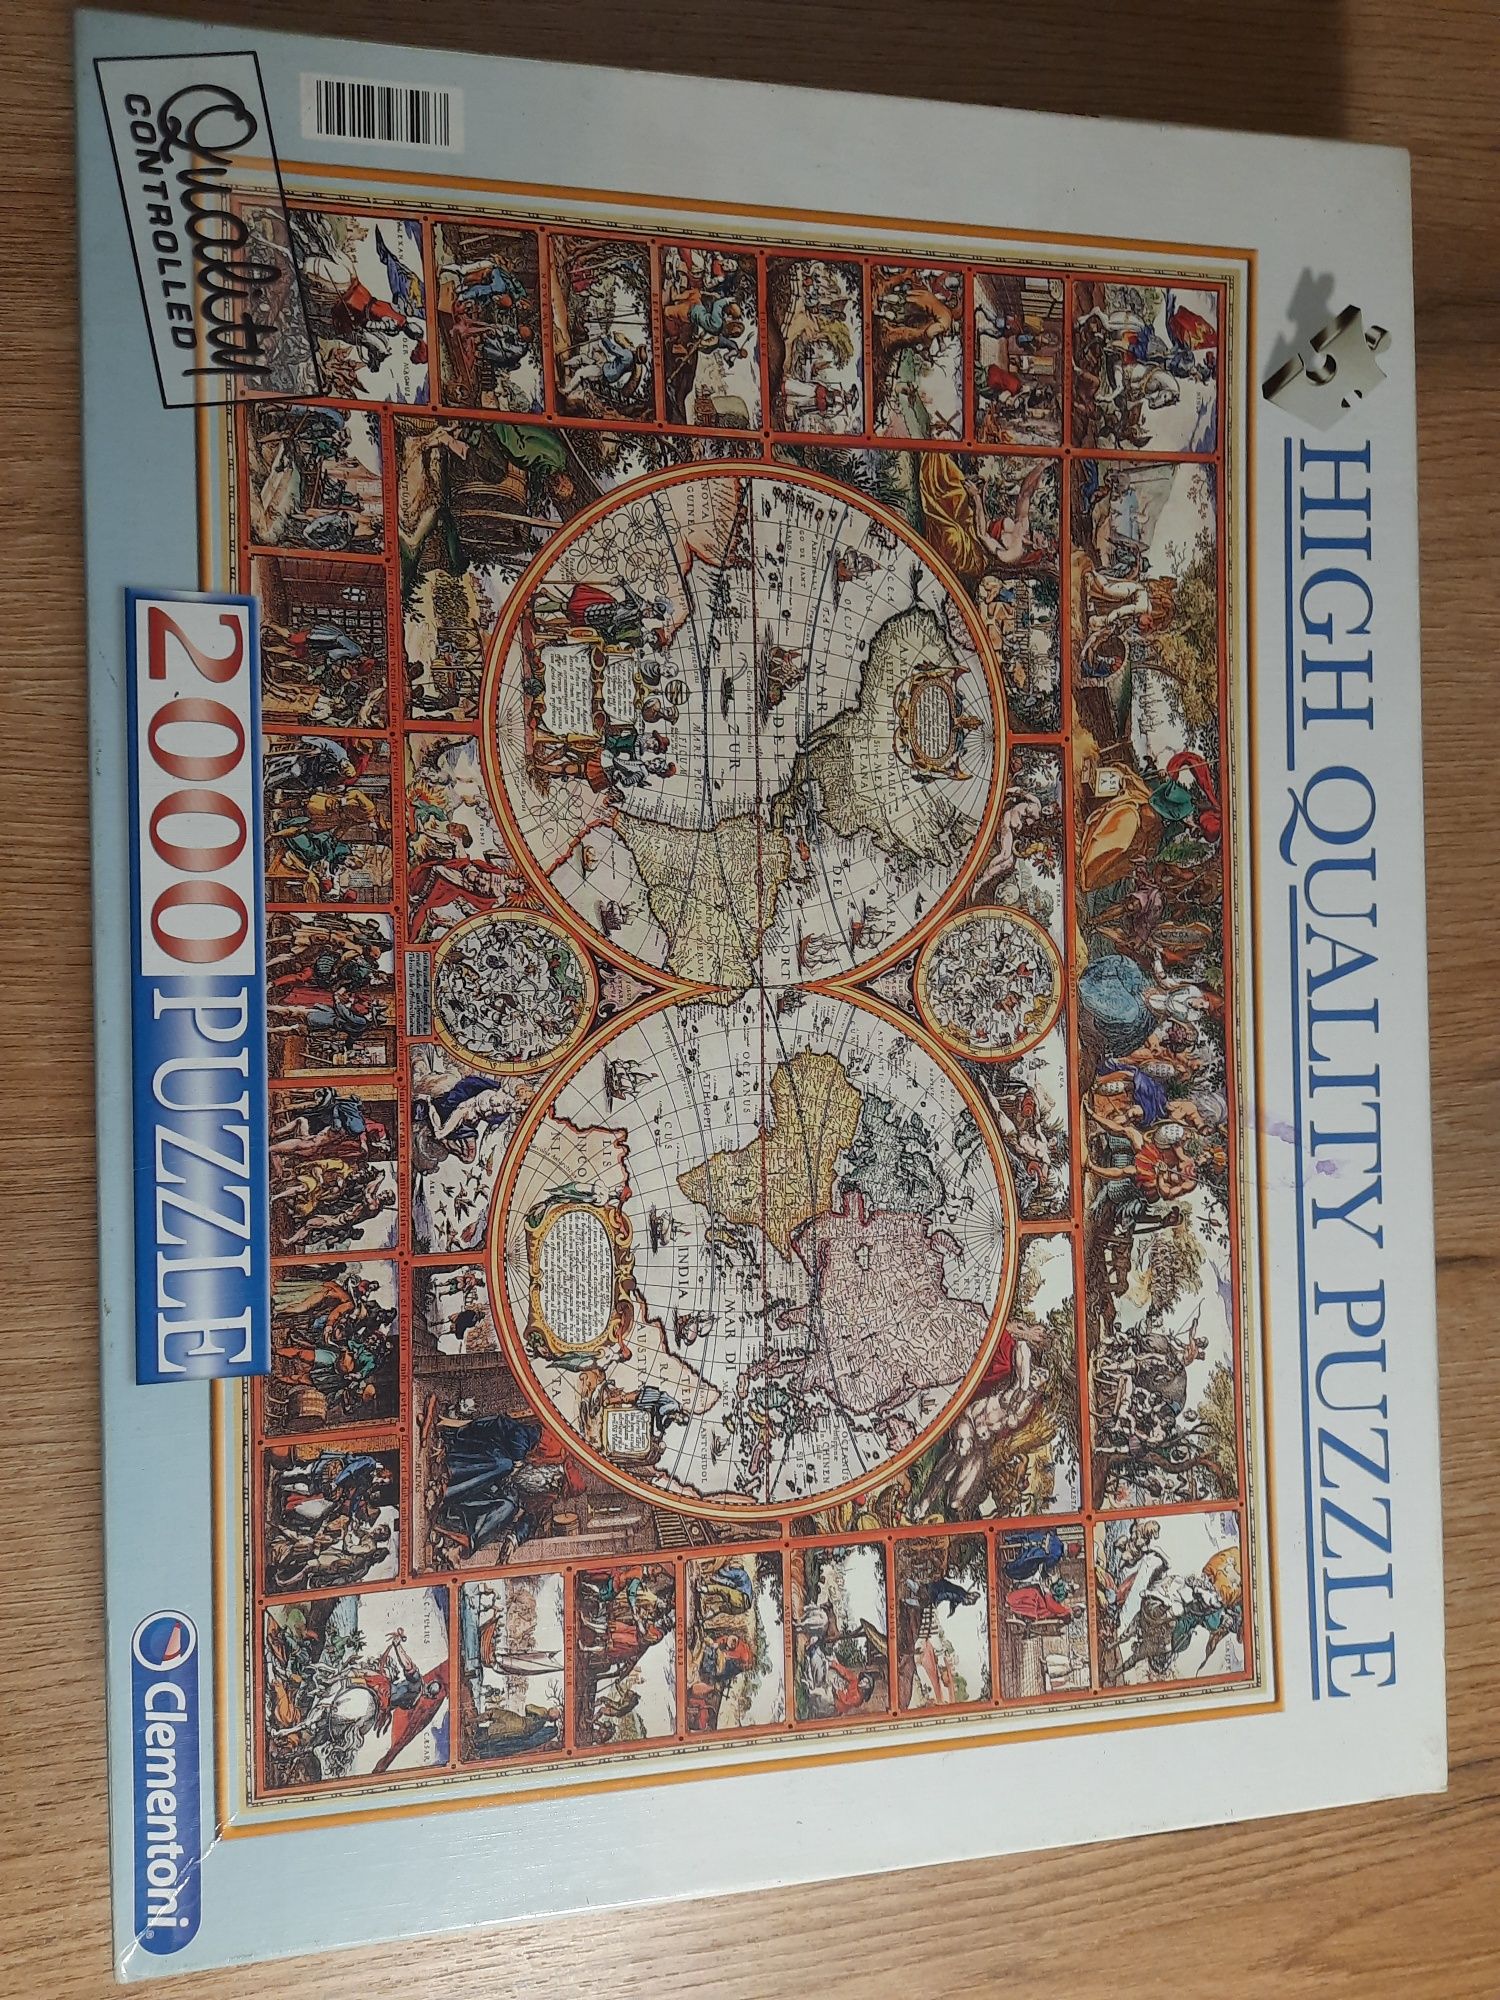 Puzzle mapa świata